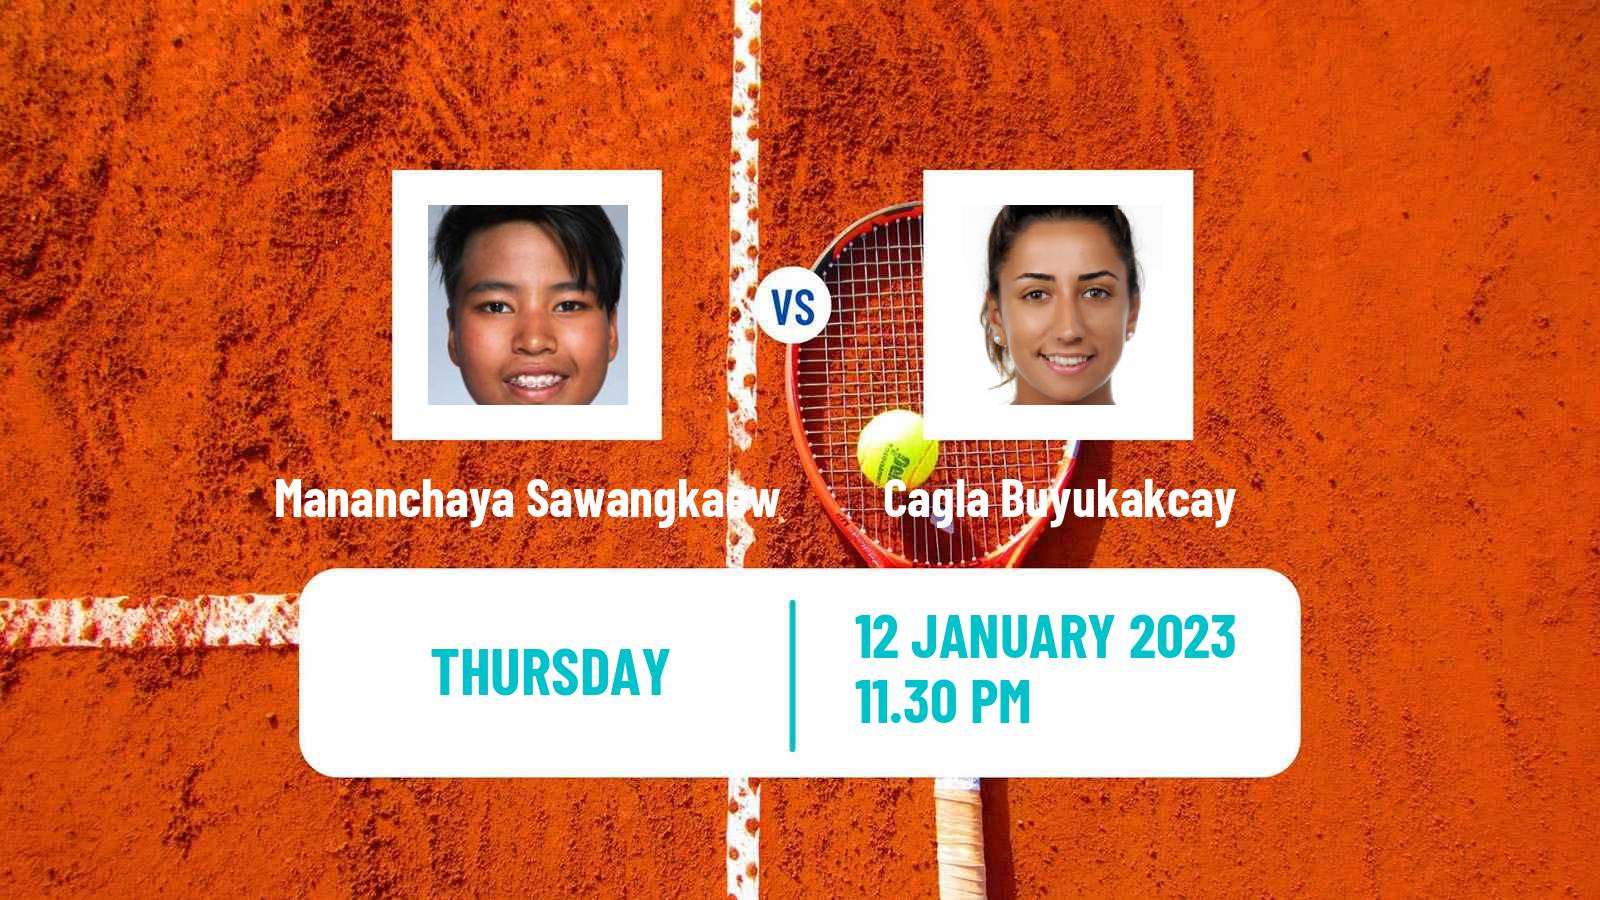 Tennis ITF Tournaments Mananchaya Sawangkaew - Cagla Buyukakcay